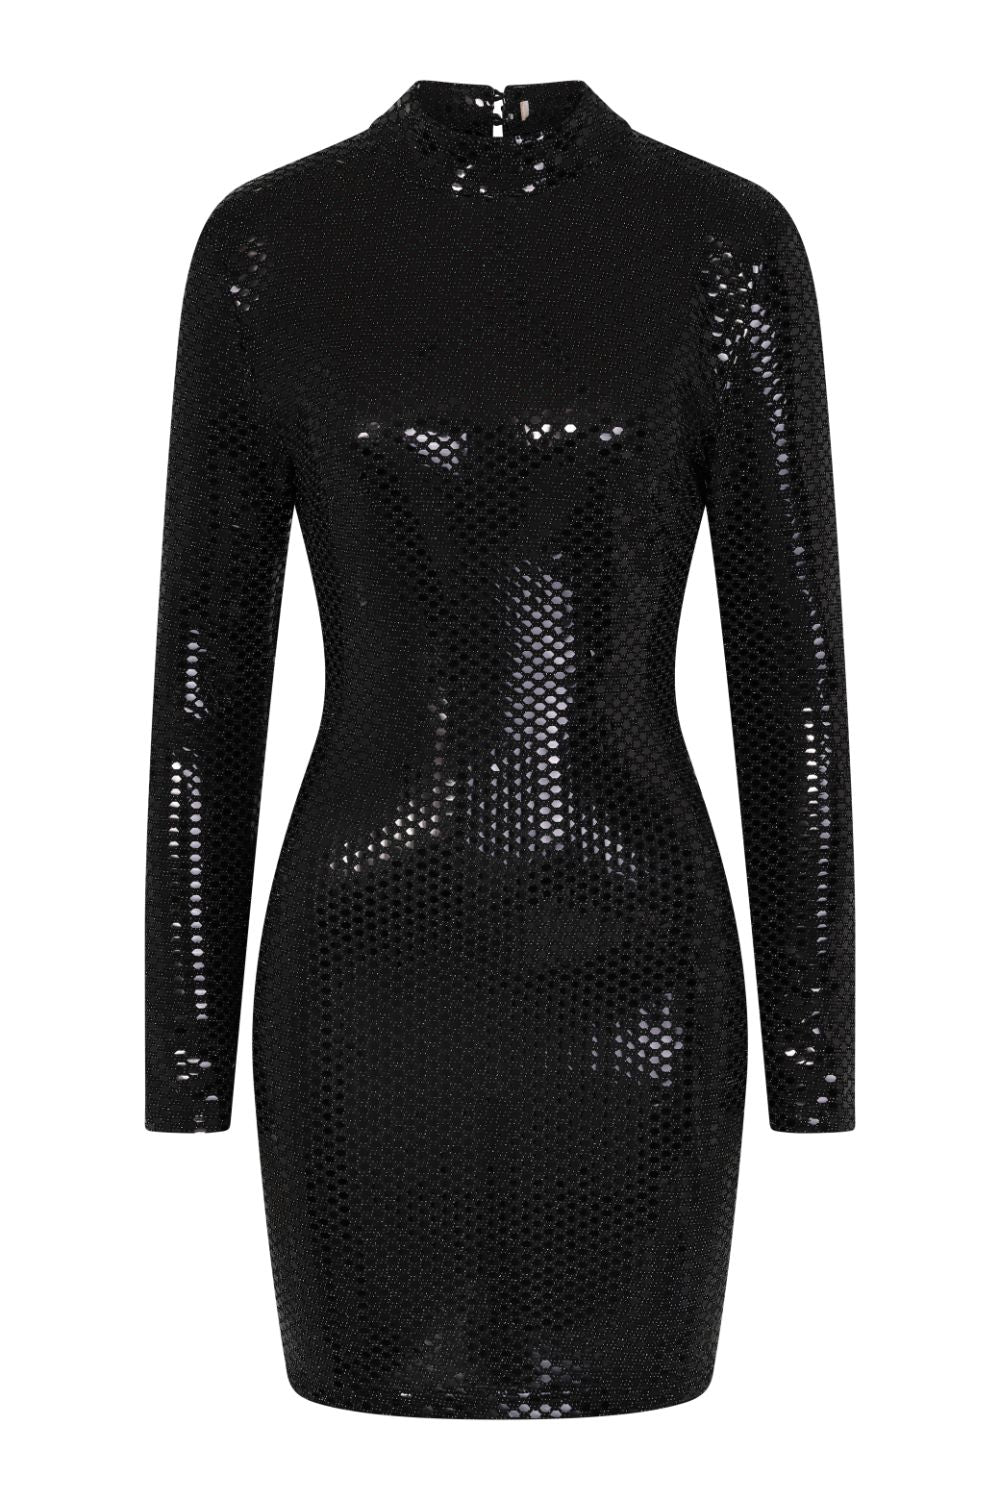 Hypnotised Black Metallic Mirrored Sequin Bodycon Dress